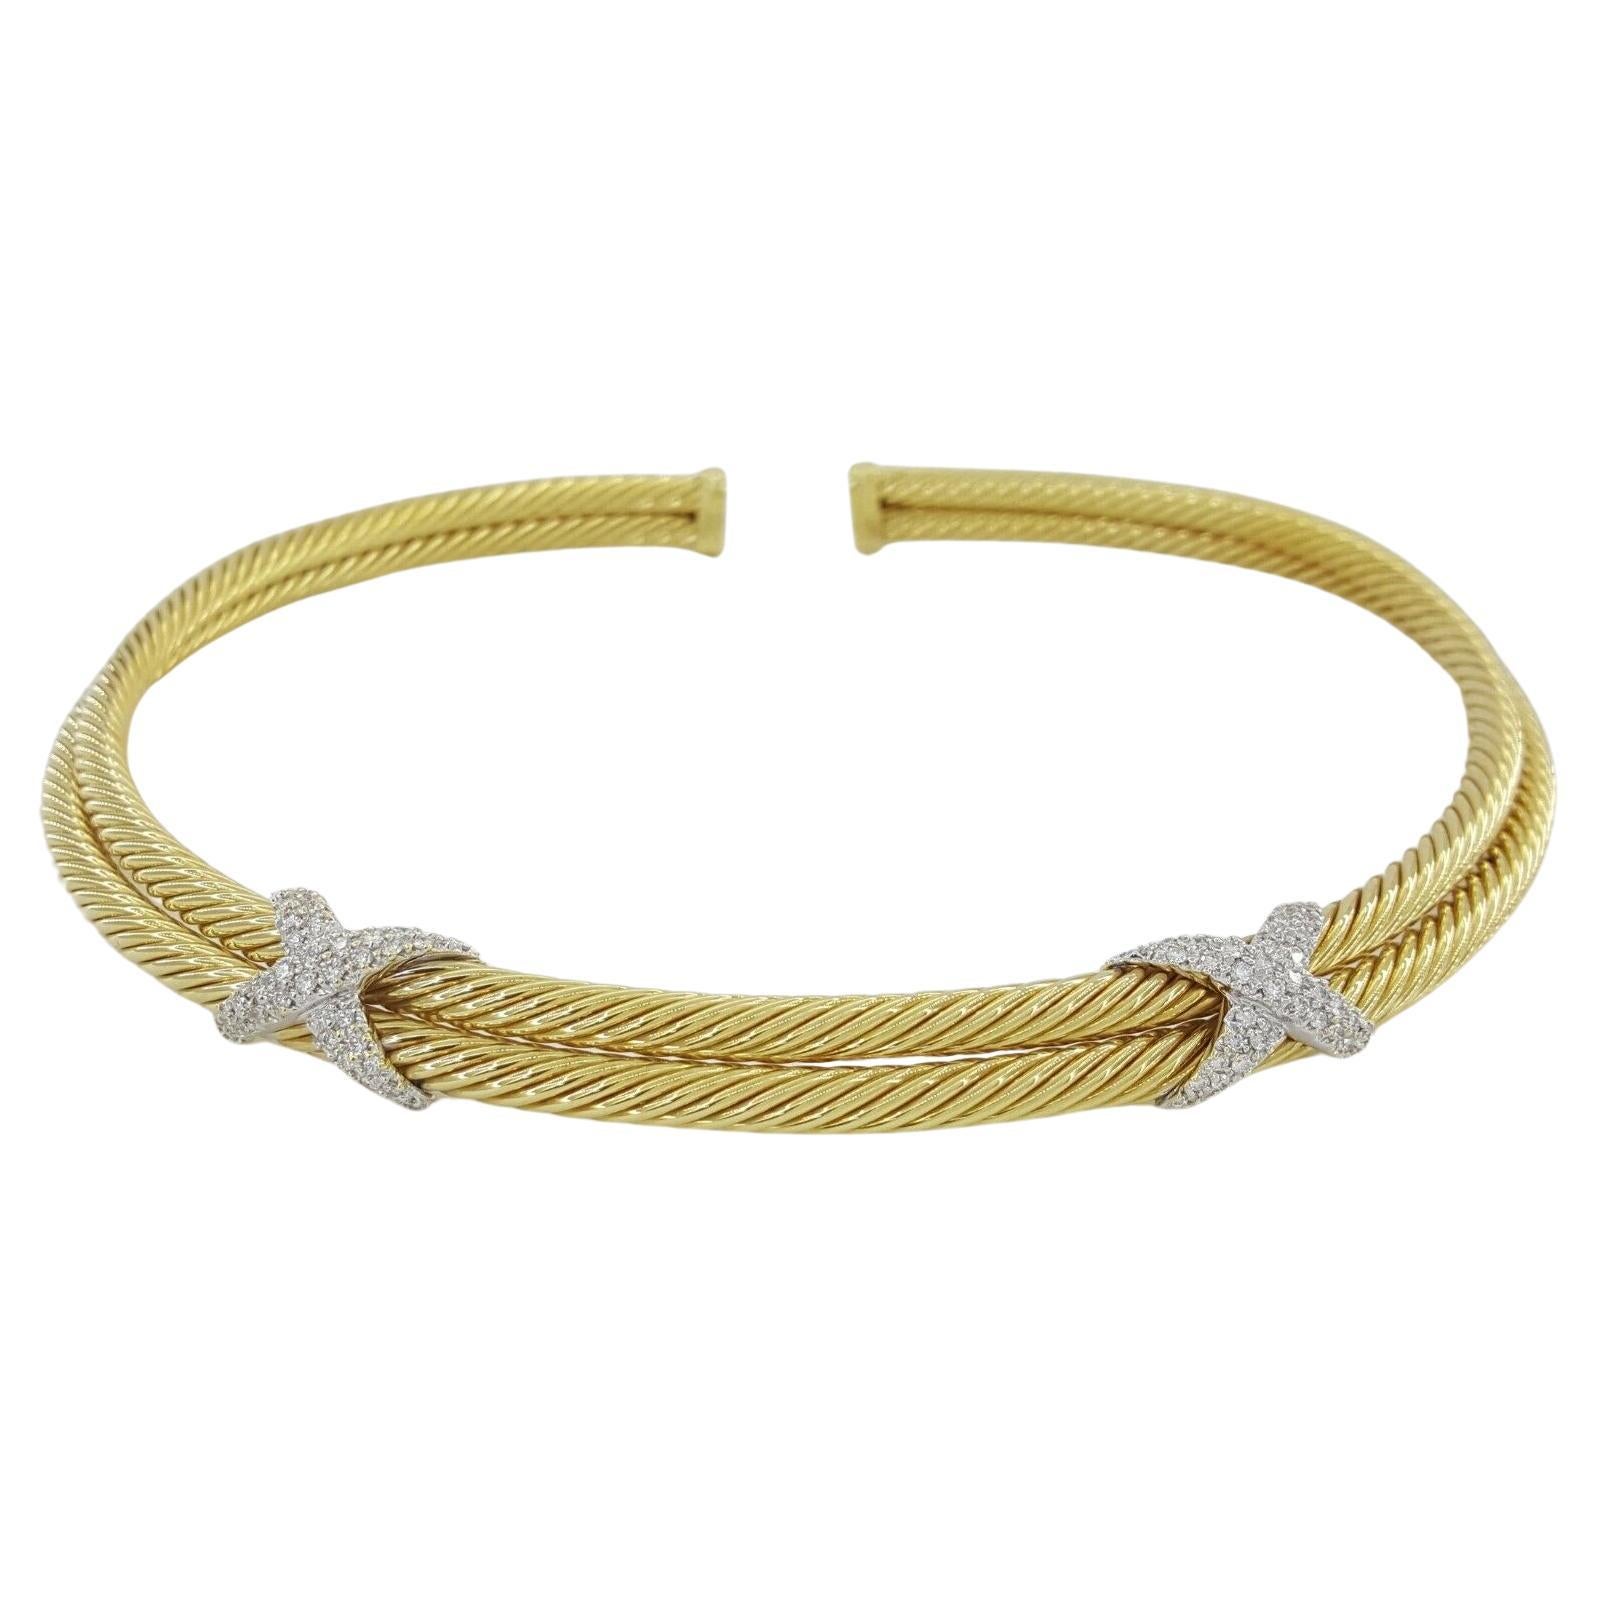 David Yurman 18K Yellow Gold "X" Double Cable Flexible Wire Choker Necklace